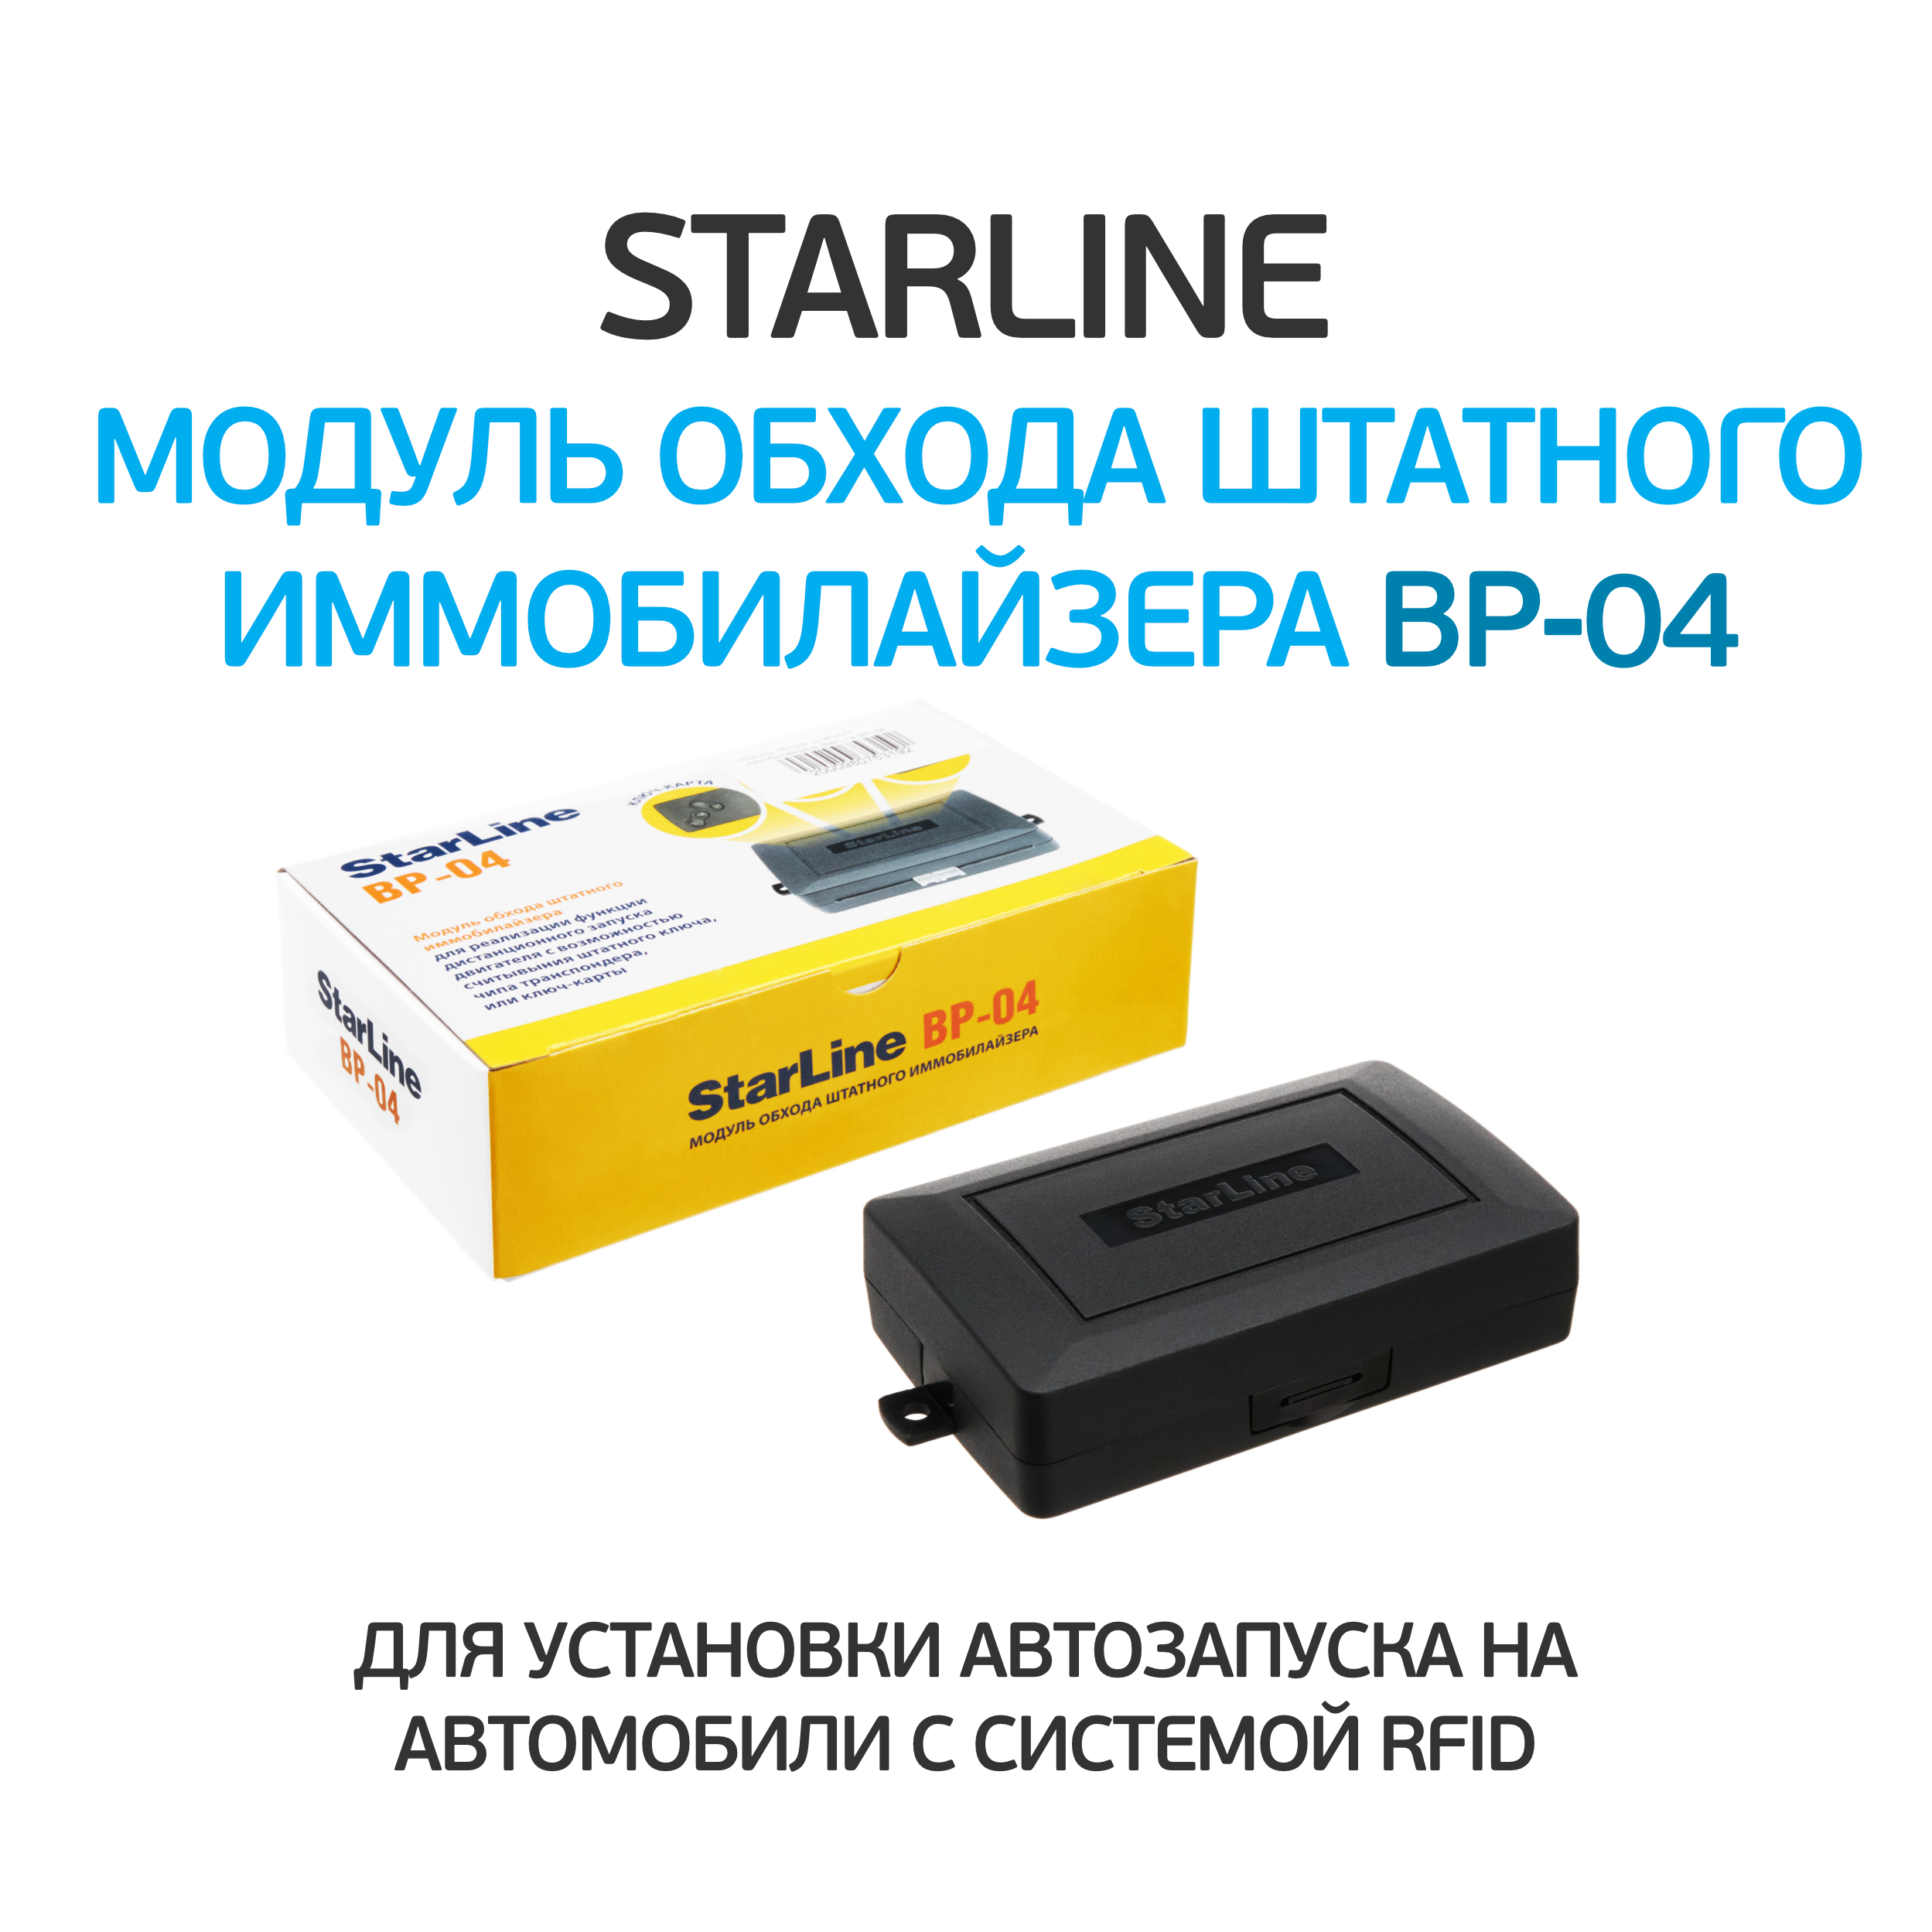 Обход иммобилайзера старлайн. Блок обхода иммобилайзера STARLINE a93. Модуль обхода иммобилайзера STARLINE BP-03. Модуль обхода штатного иммобилайзера STARLINE BP-03. Обходчик иммобилайзера STARLINE ВР-03.